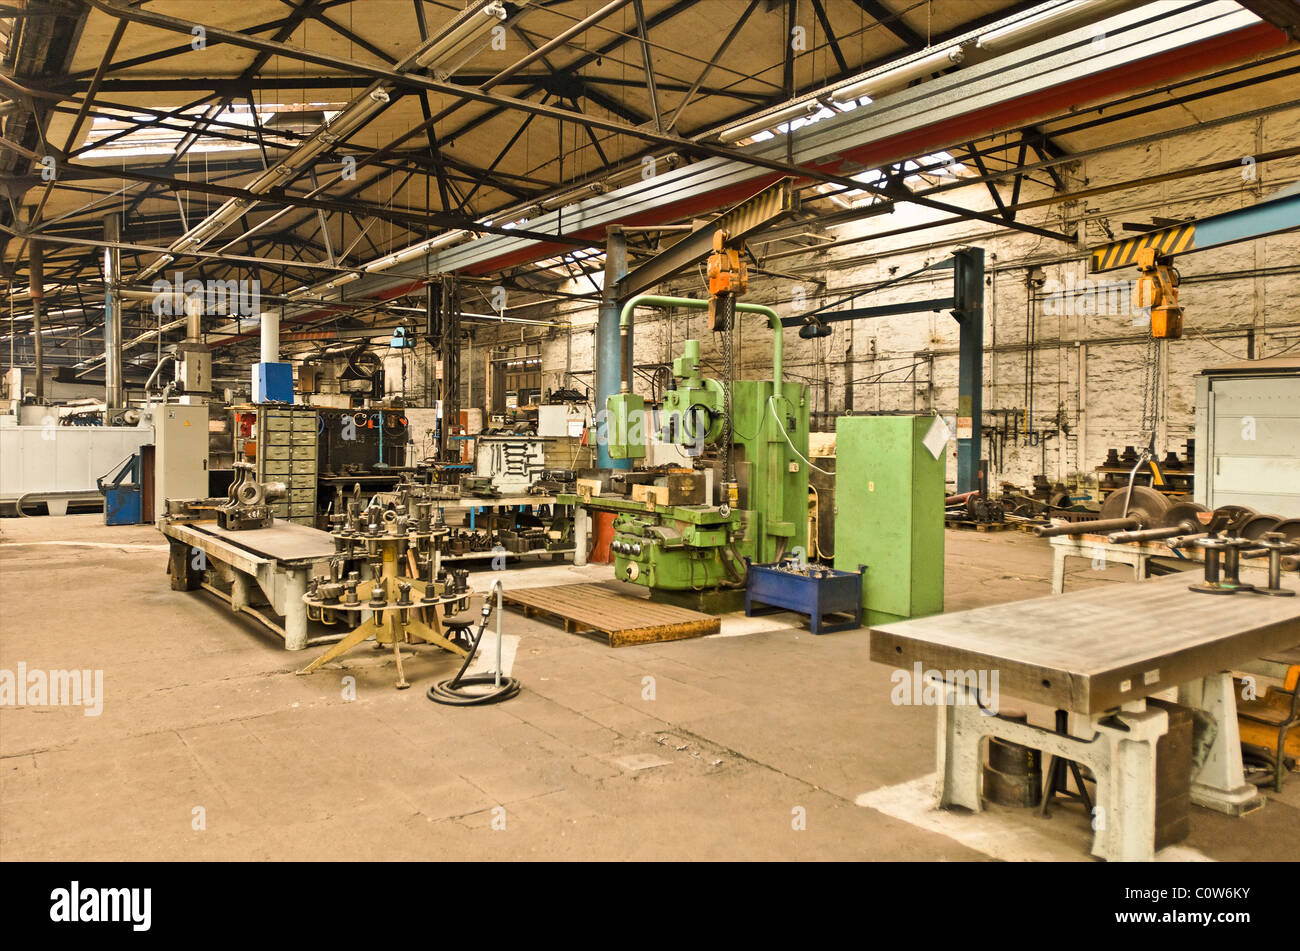 Steam locomotion plant Stock Photo